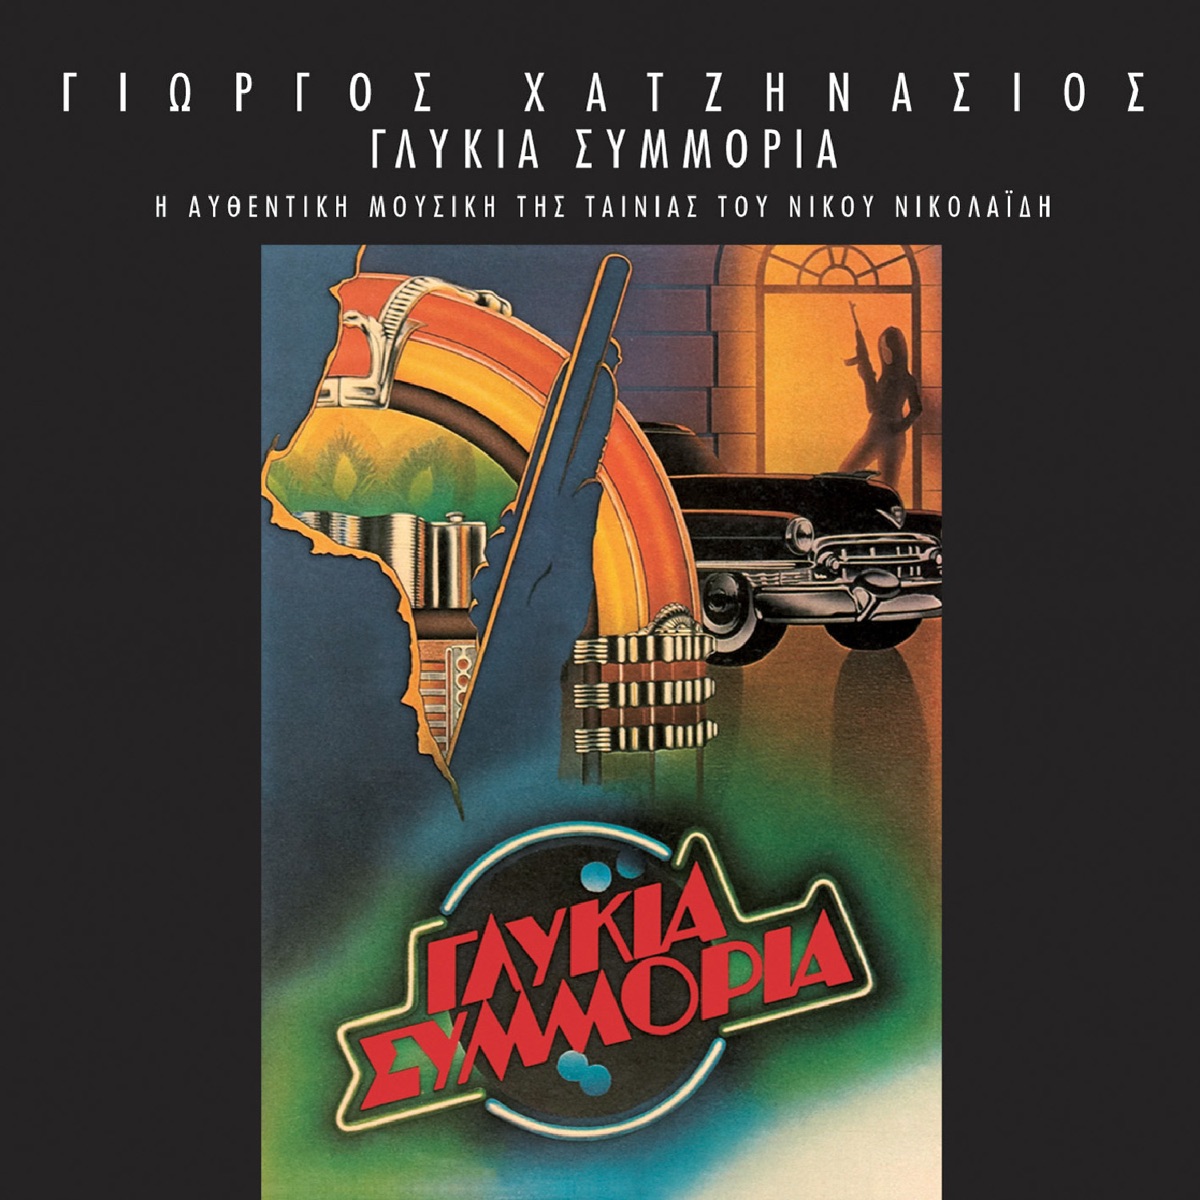 Glikia Simmoria - Album by Giorgos Hatzinasios - Apple Music